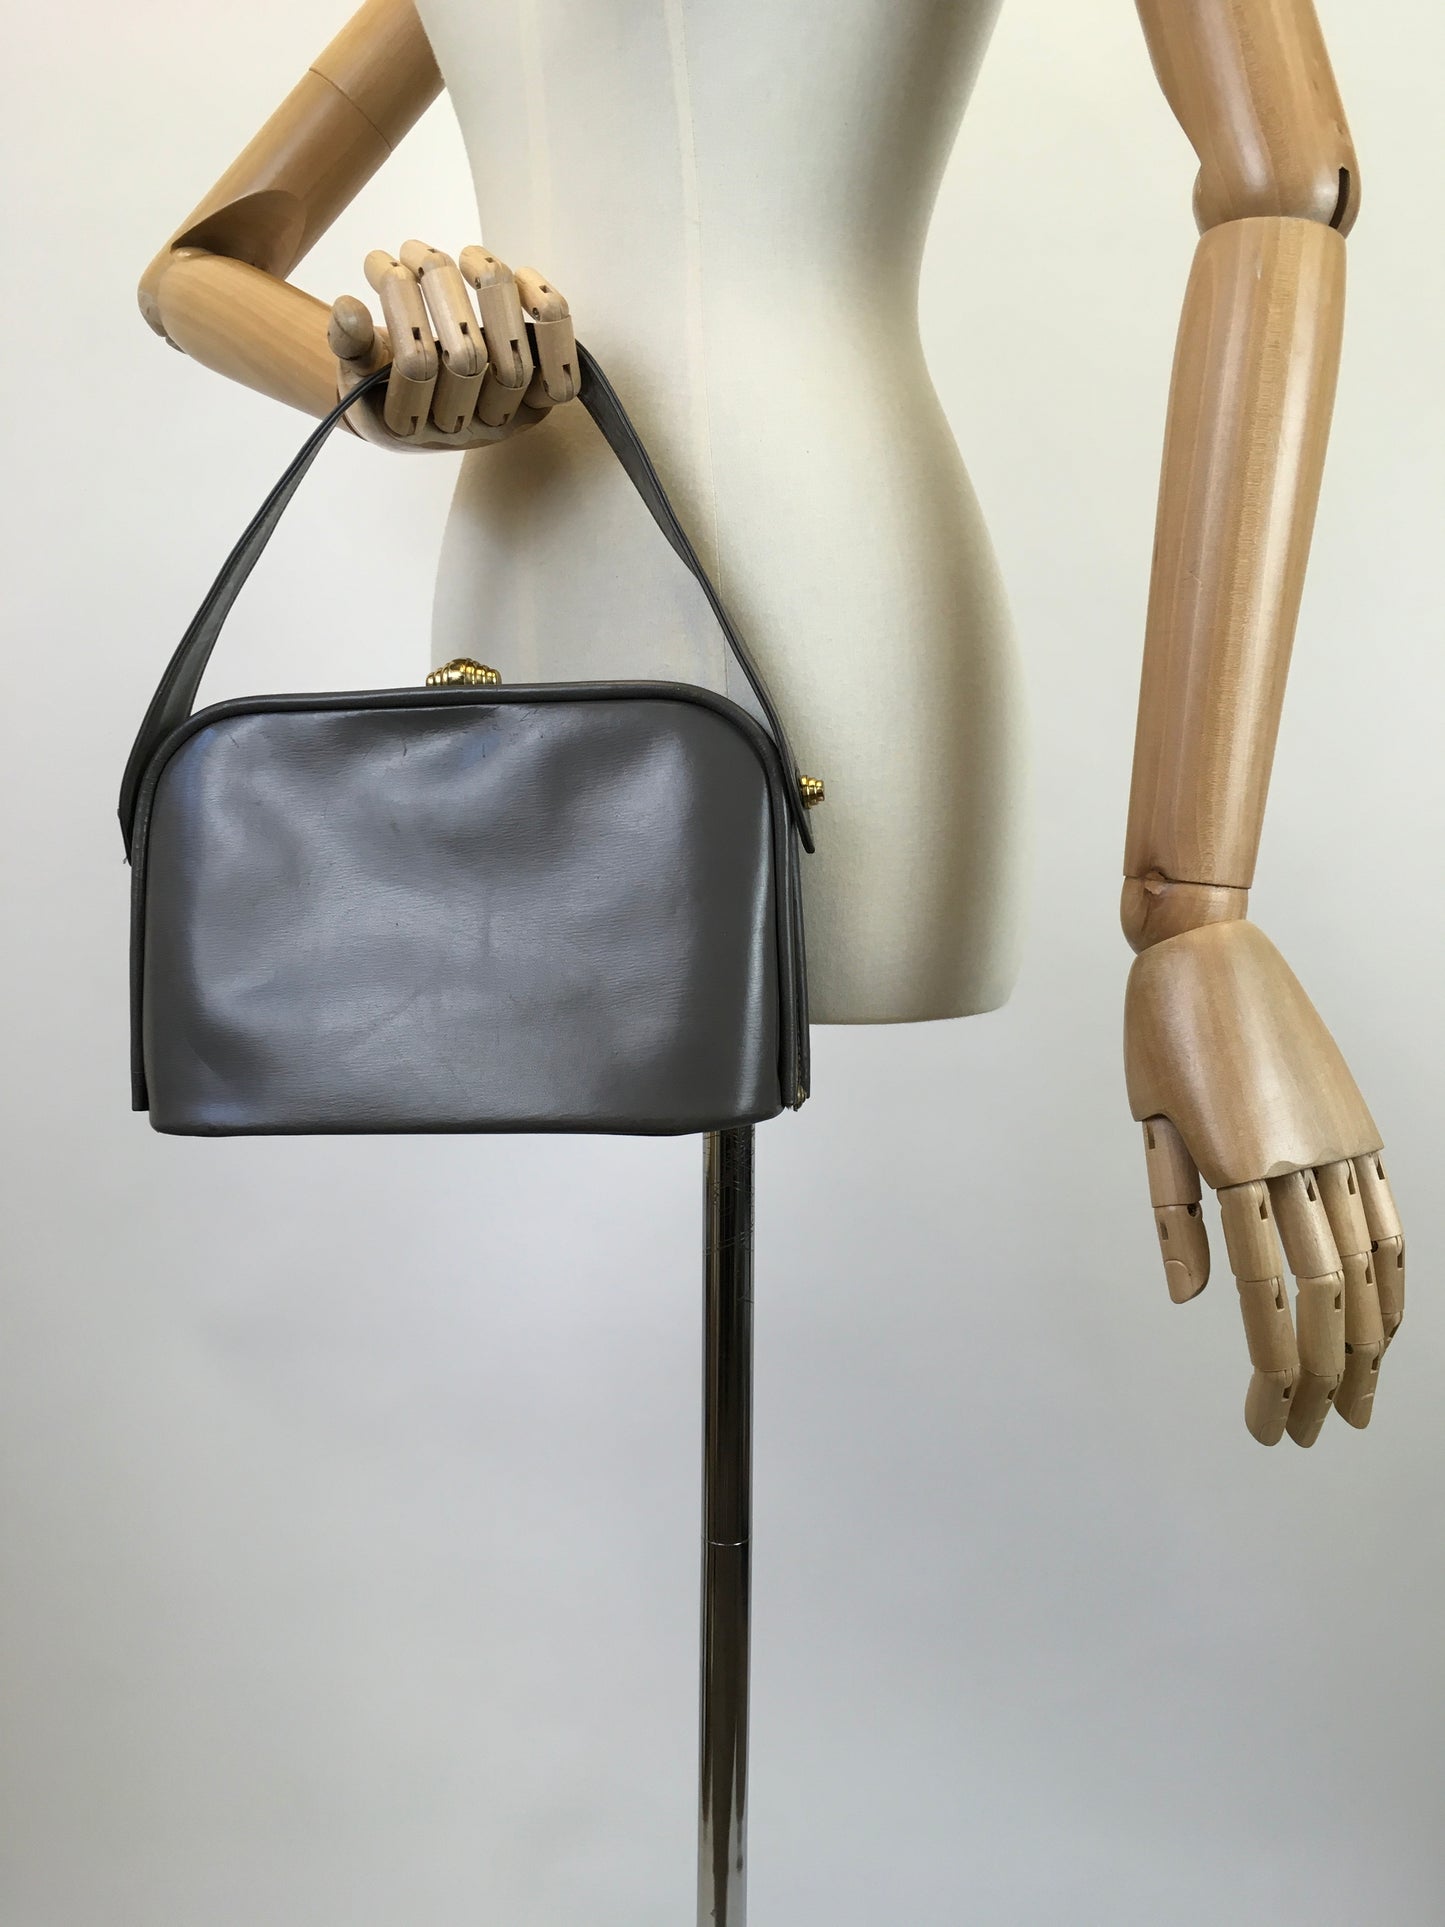 Original Late 1940's / Early 1950's Darling Handbag - In Powdered Grey